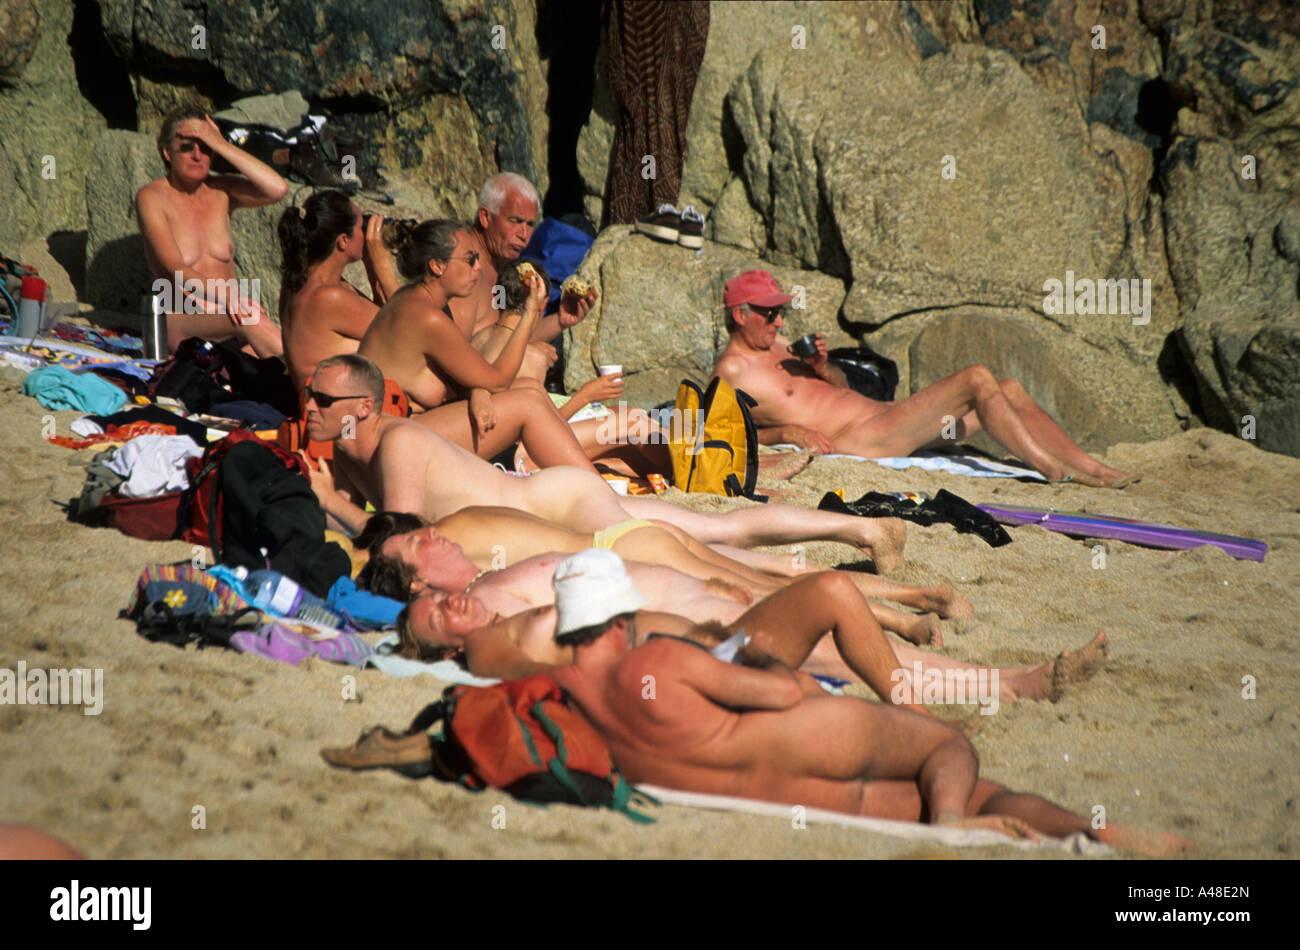 nudists photo  Nudists on beach Porthcurno Cornwall England UK Europe Stock ...